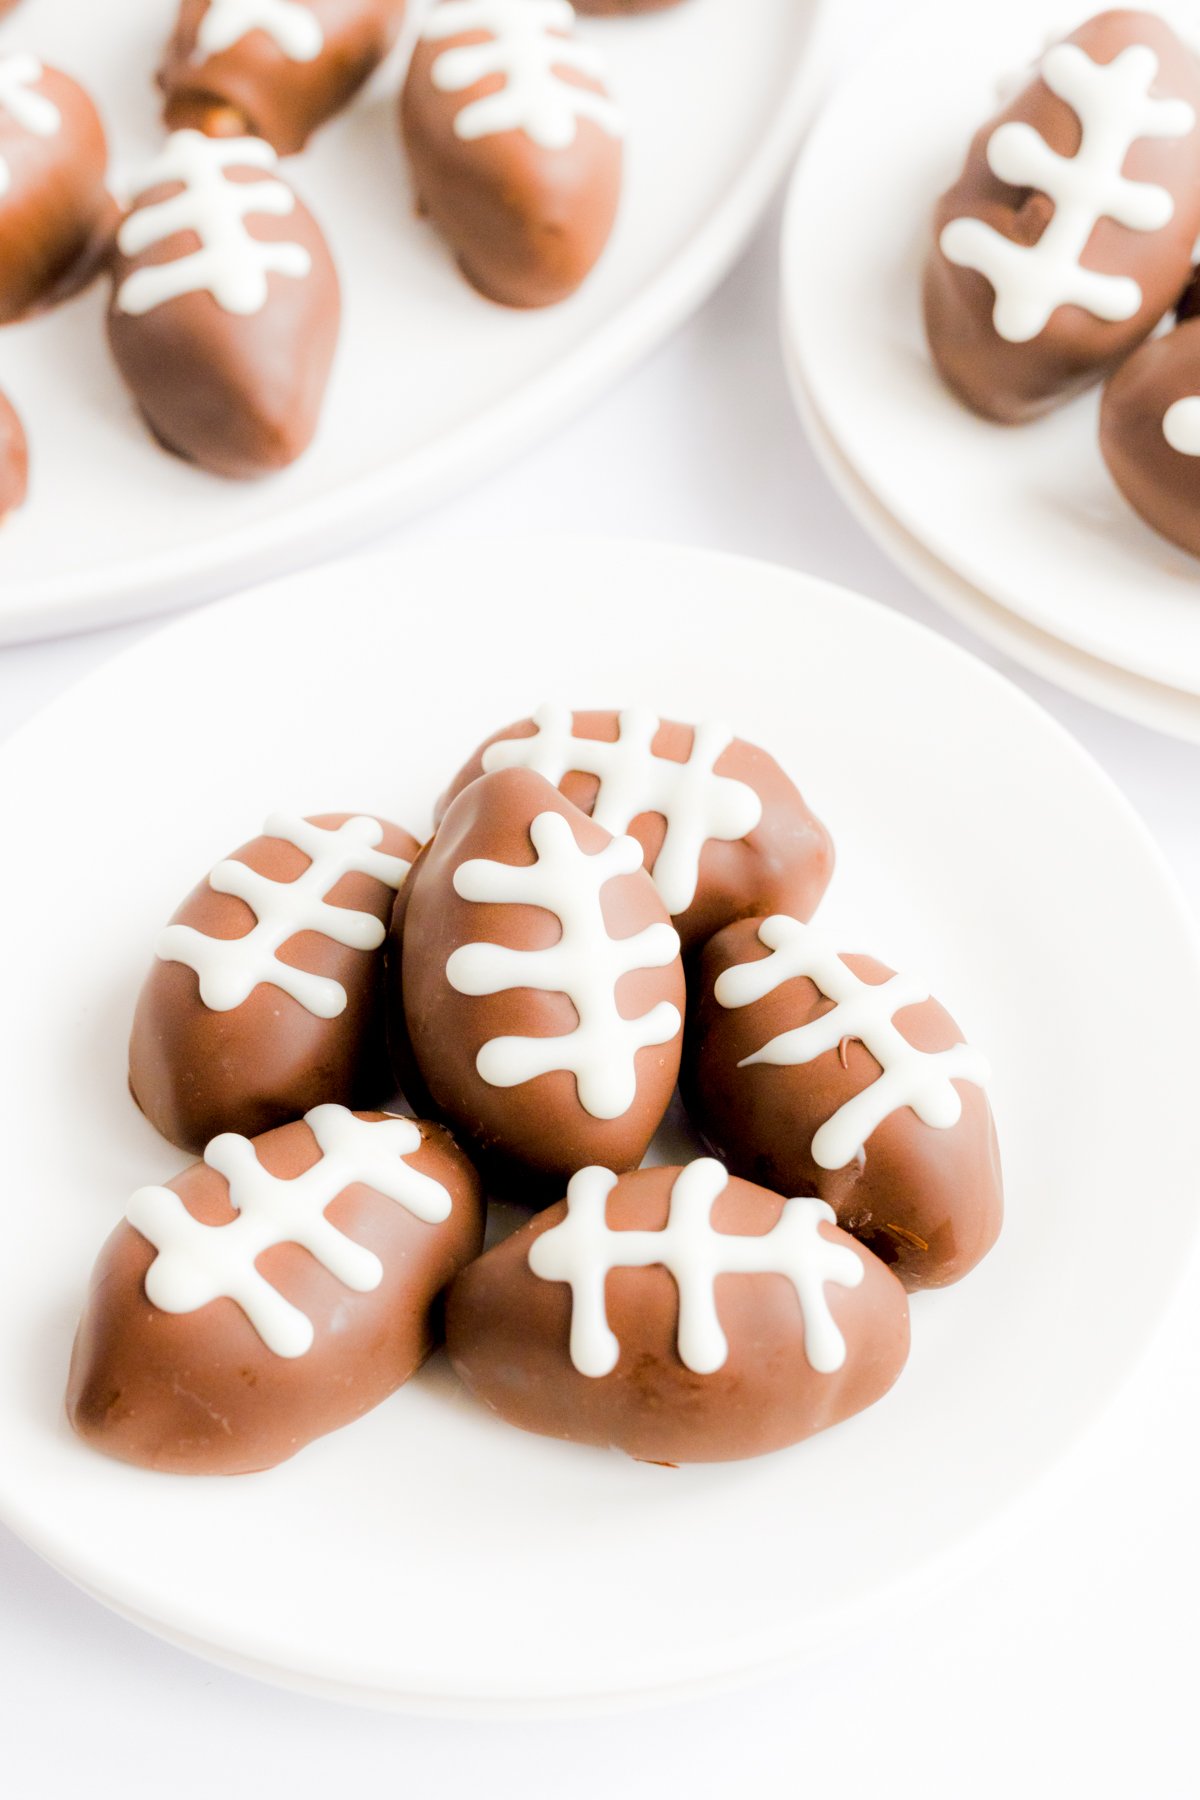 A plate of peanut butter truffles shaped like footballs.